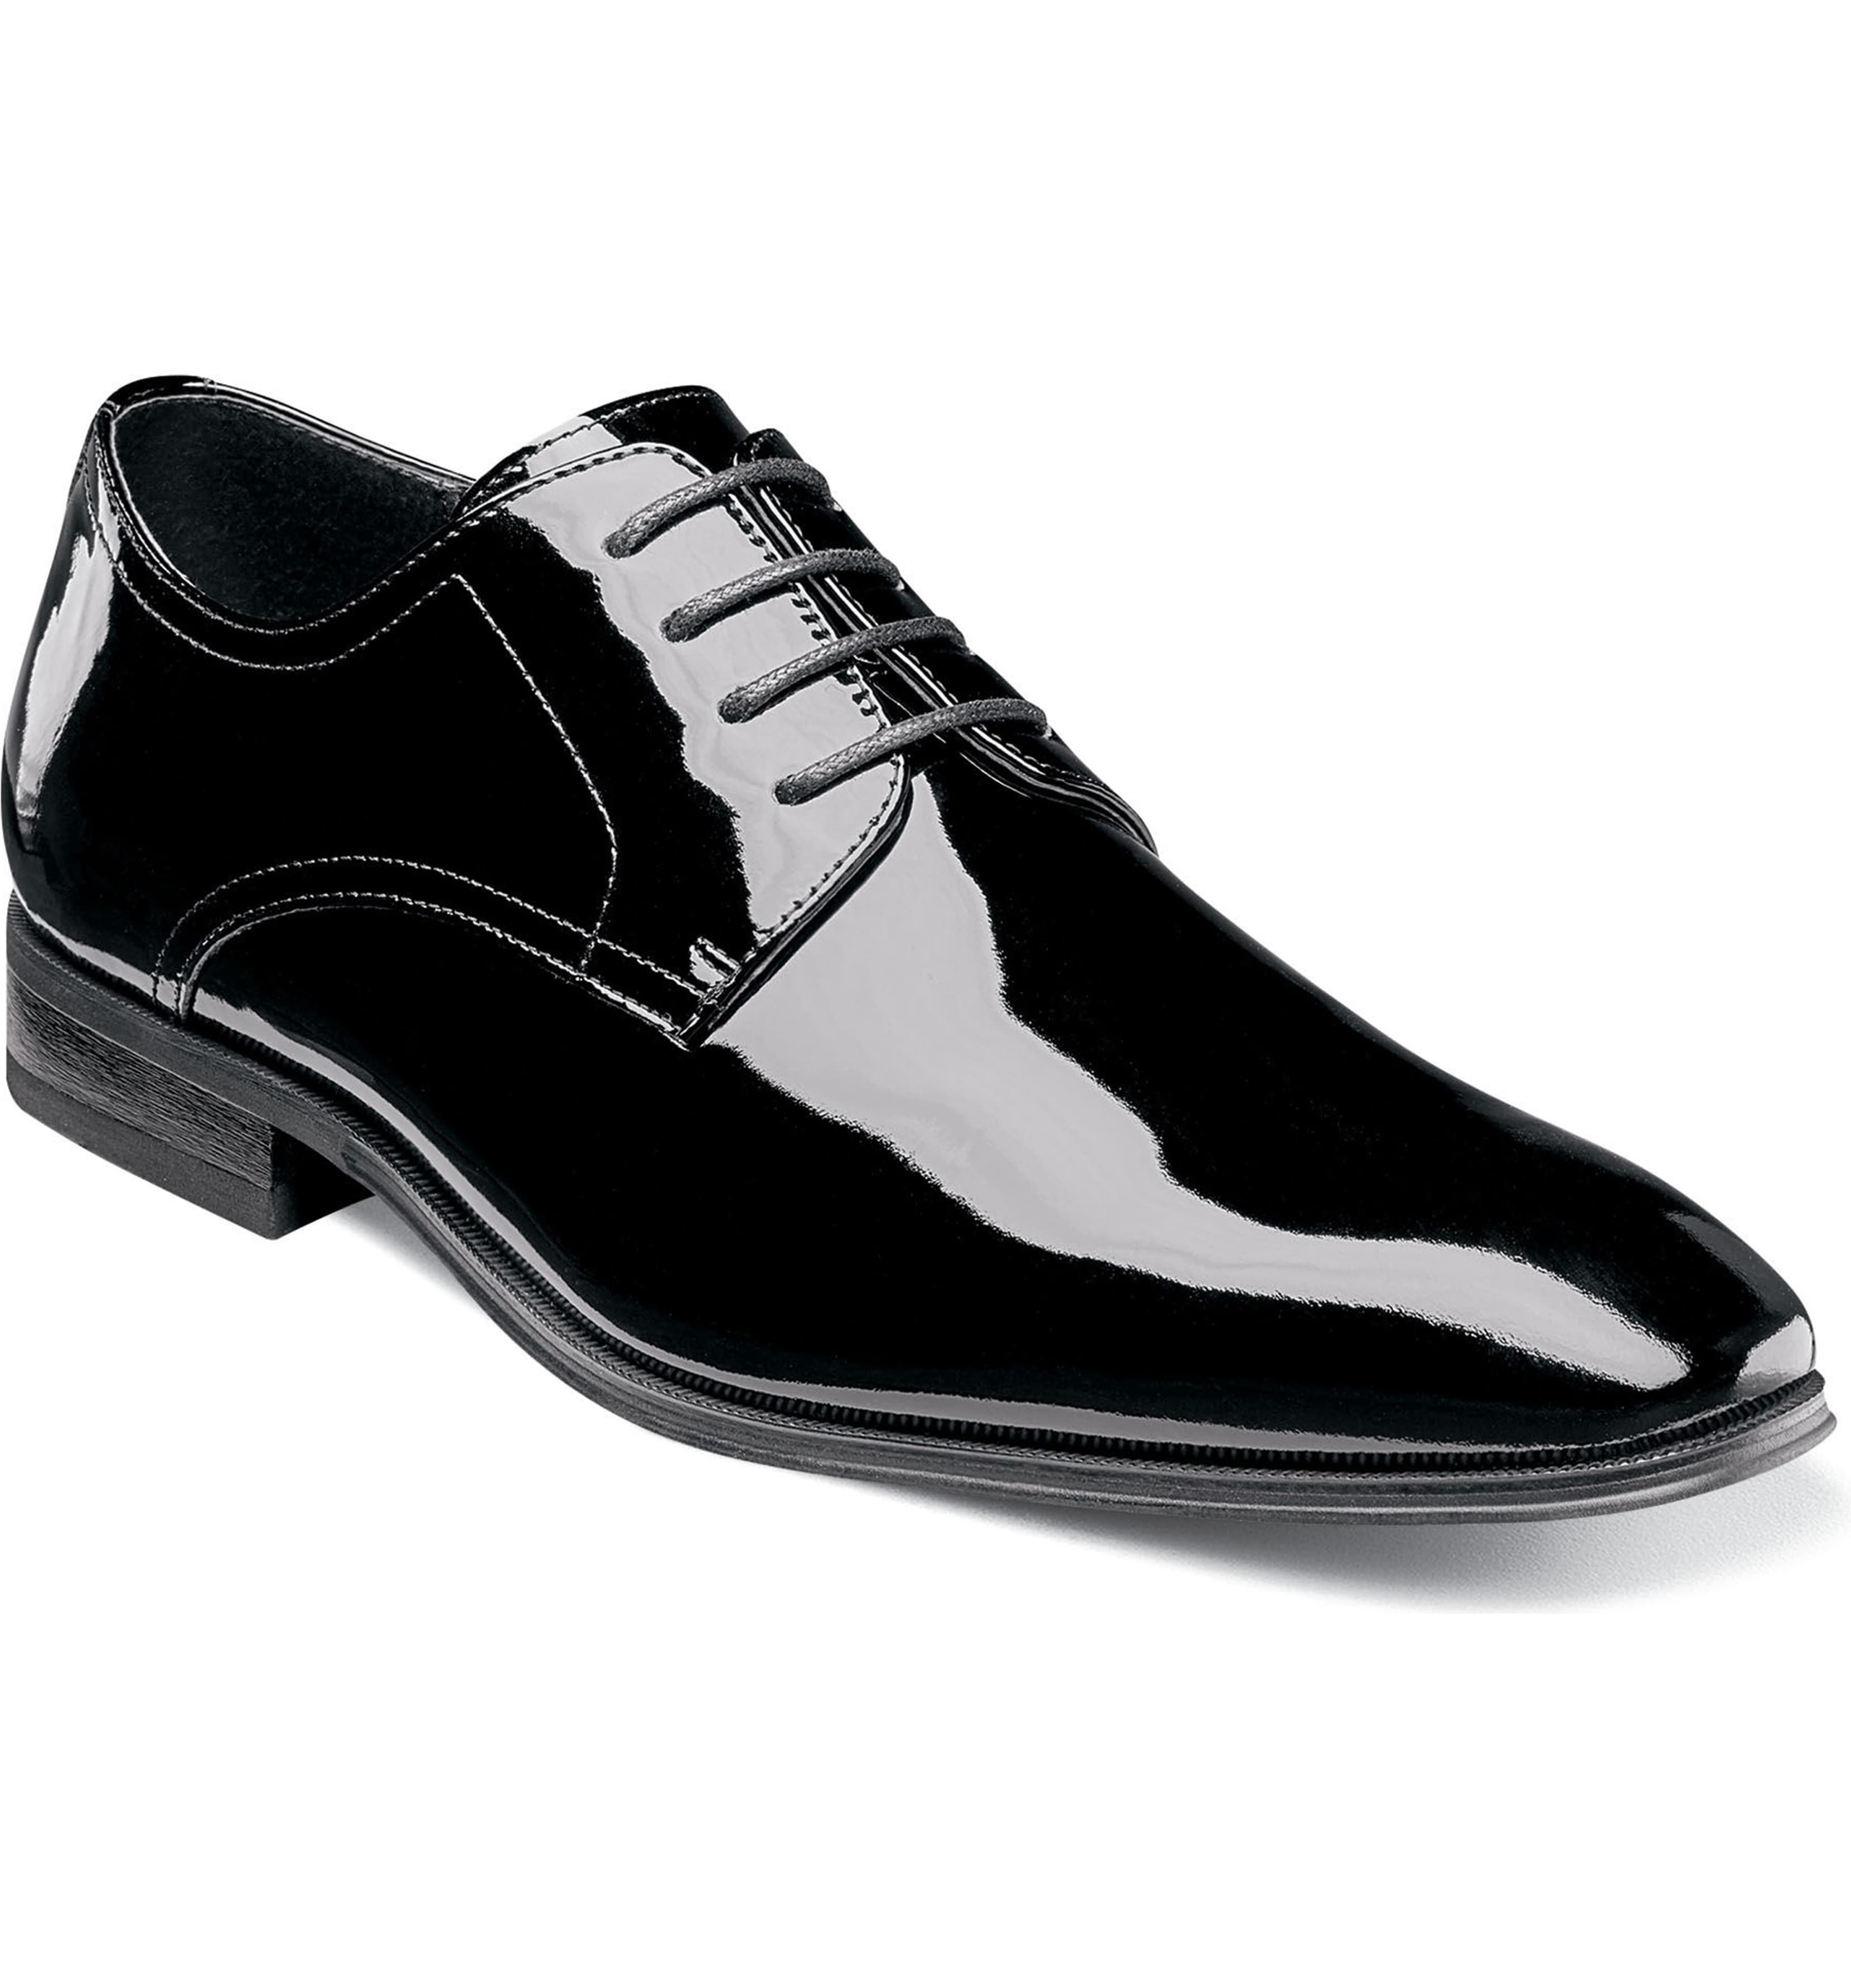 black and white tuxedo heels